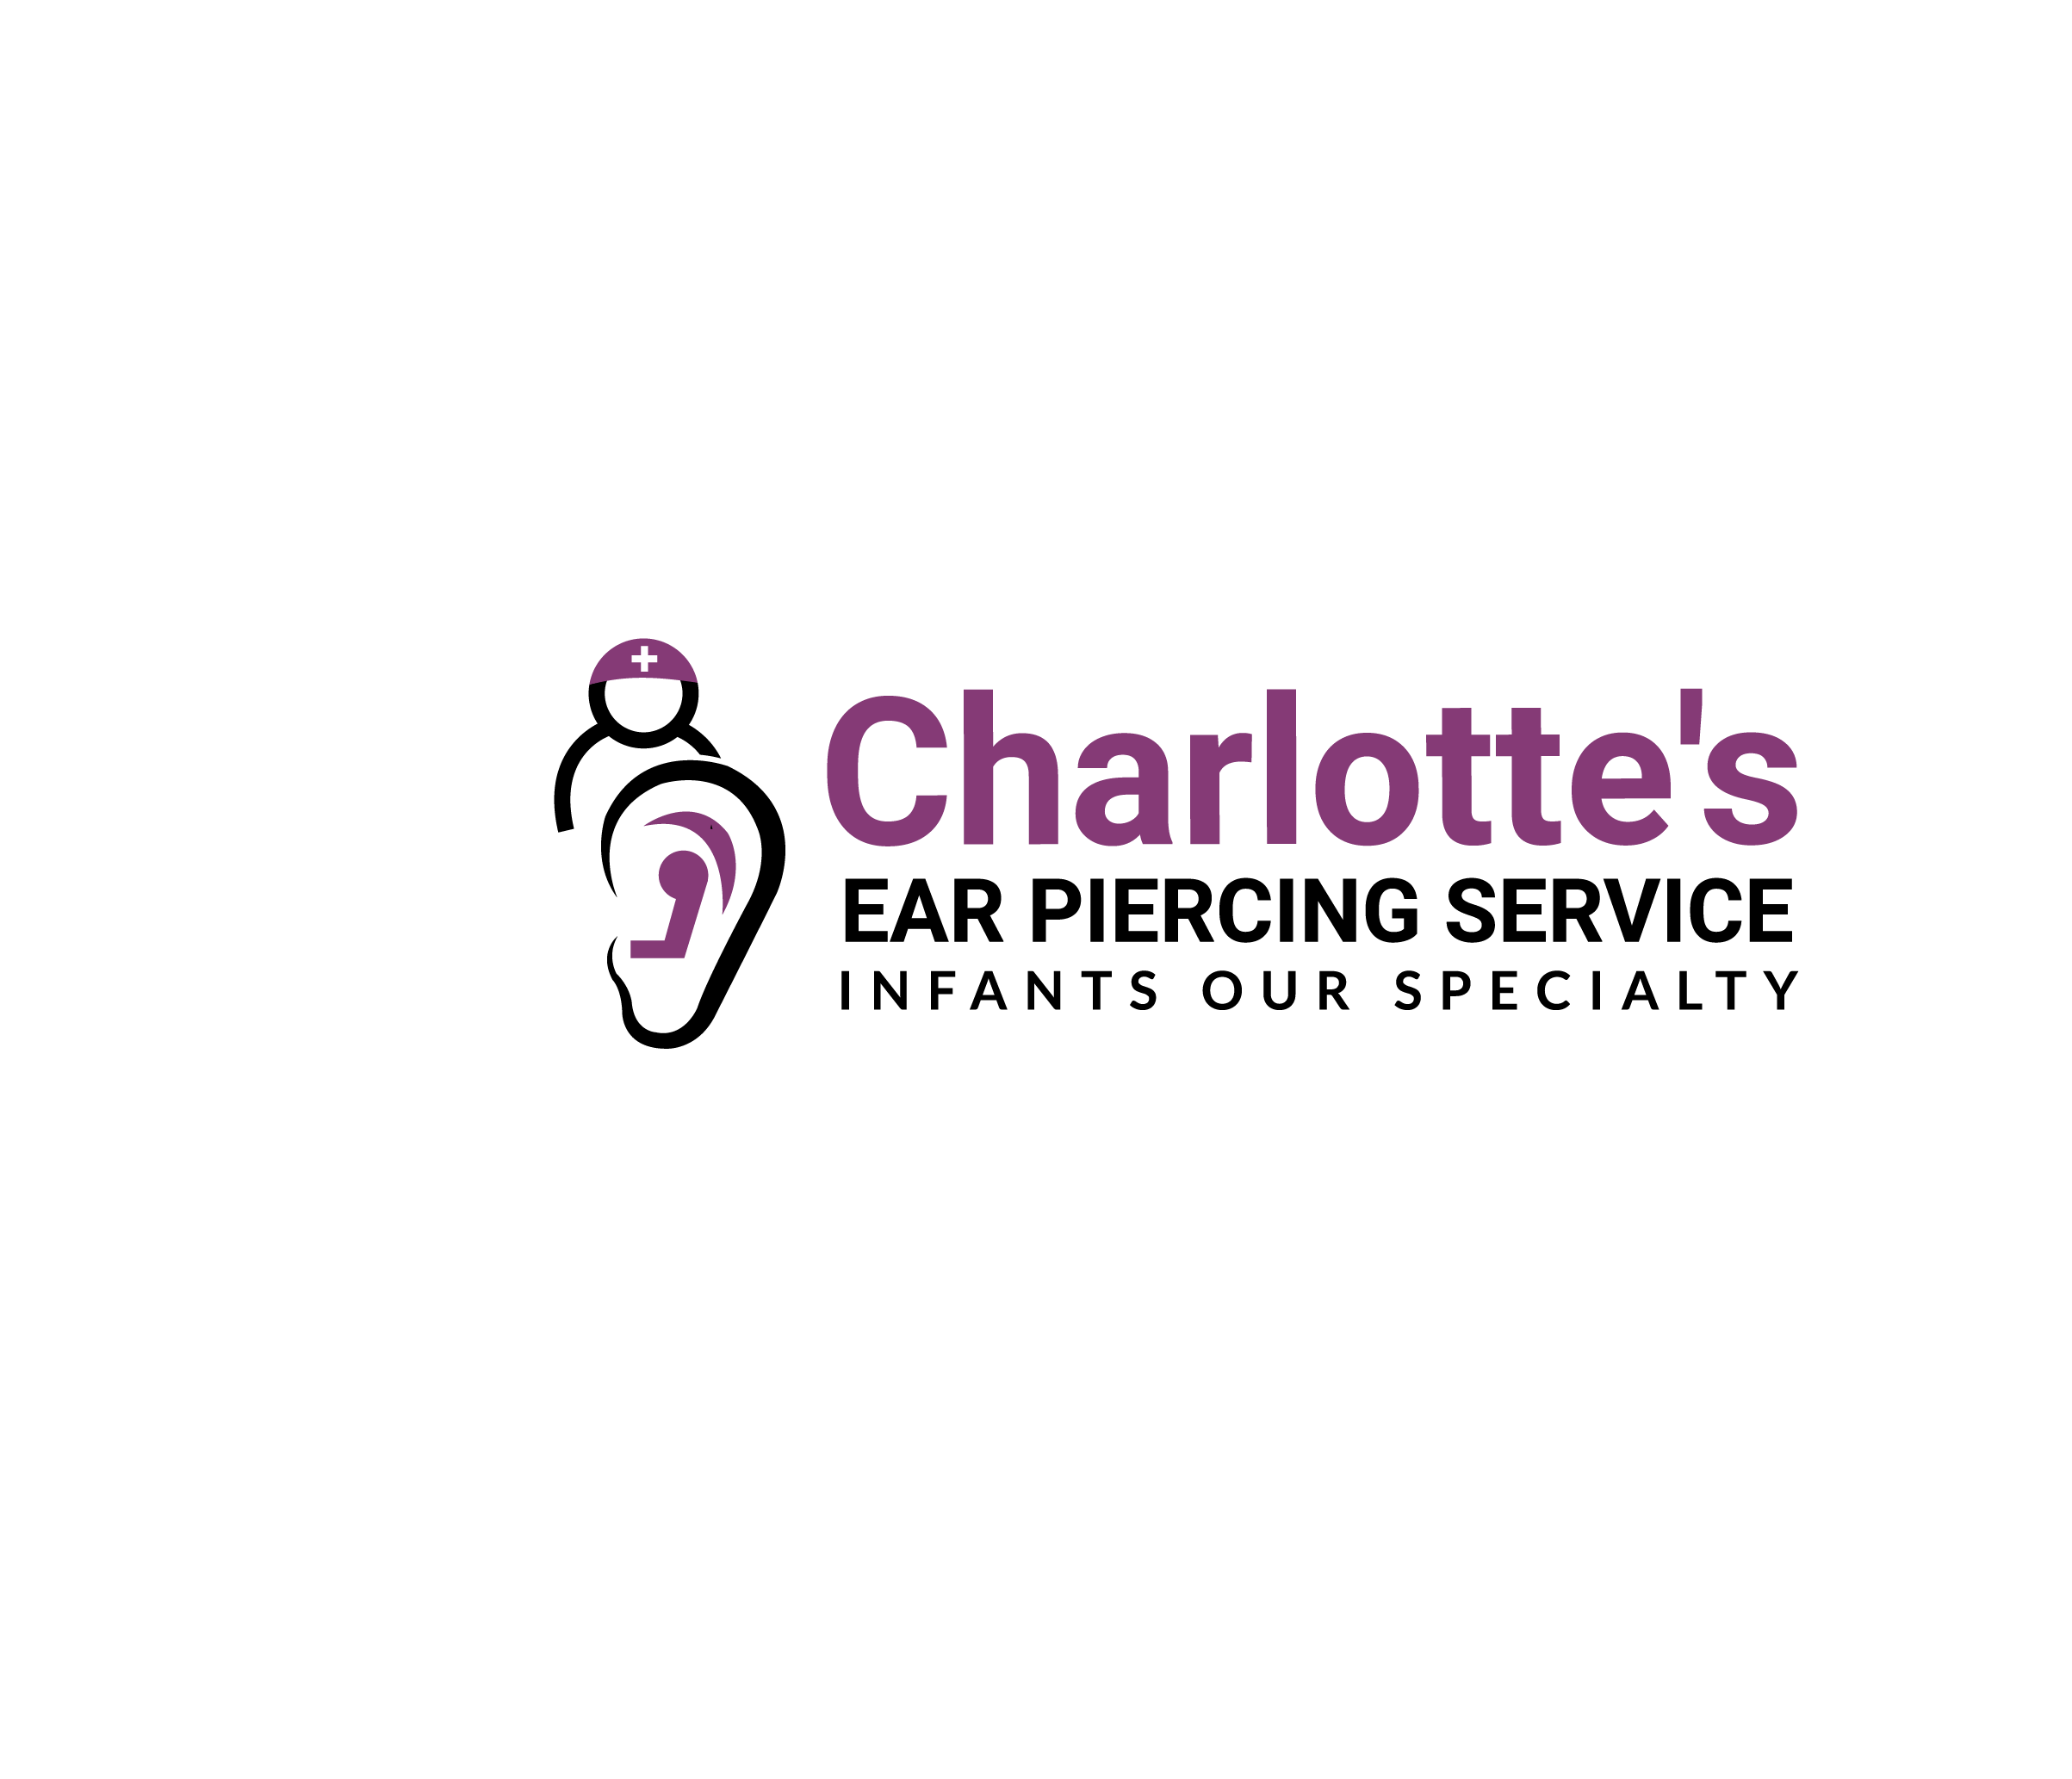 Charlottes Ear Piercing Service